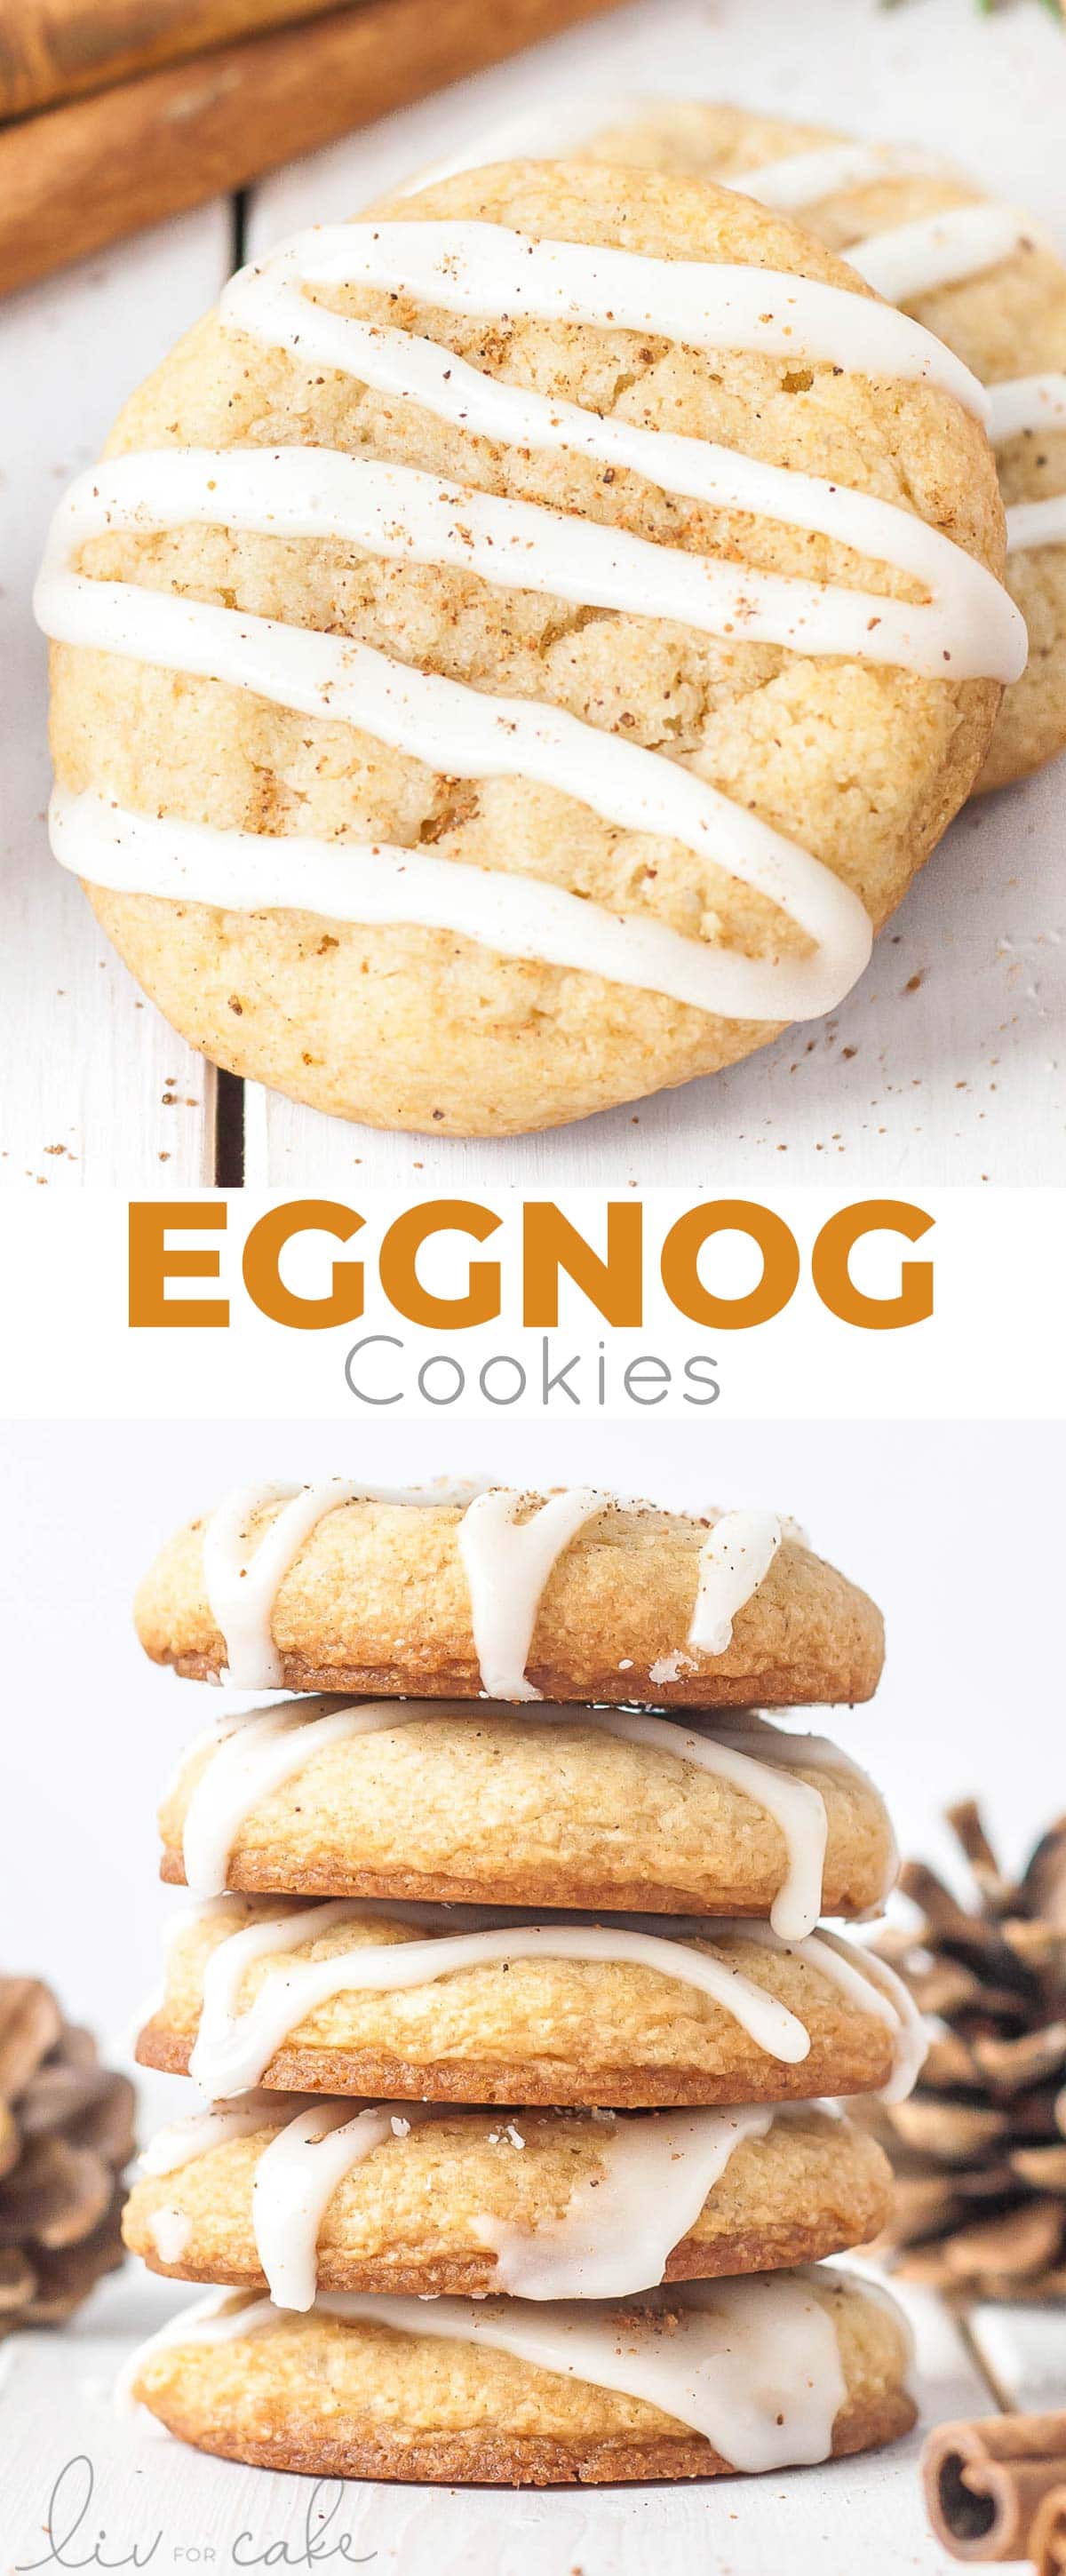 Eggnog Cookies photo collage